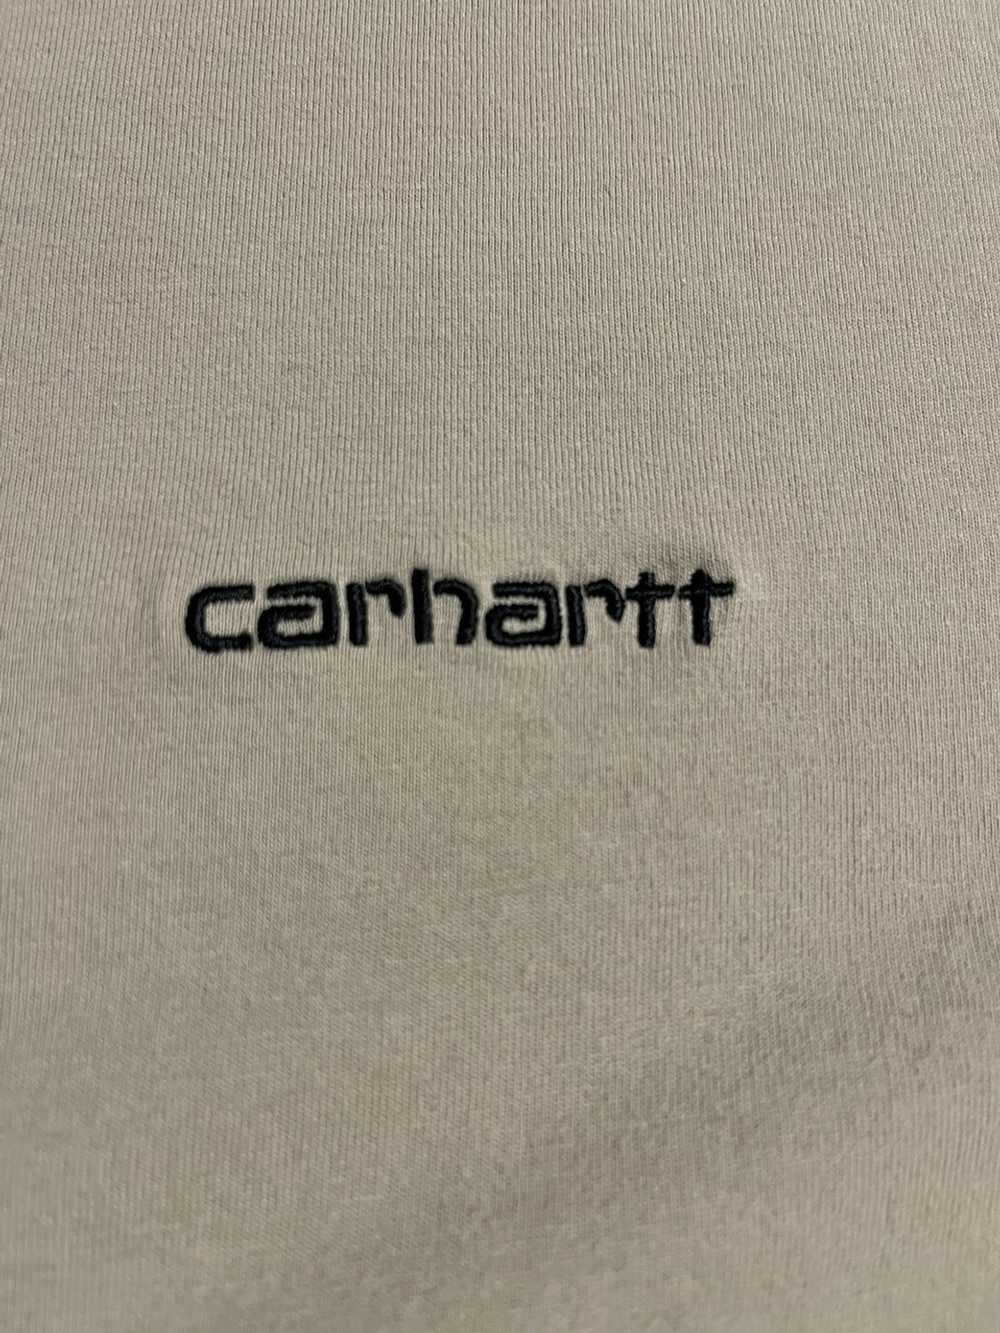 Carhartt Wip Carhartt WIP Logo Tee - image 2